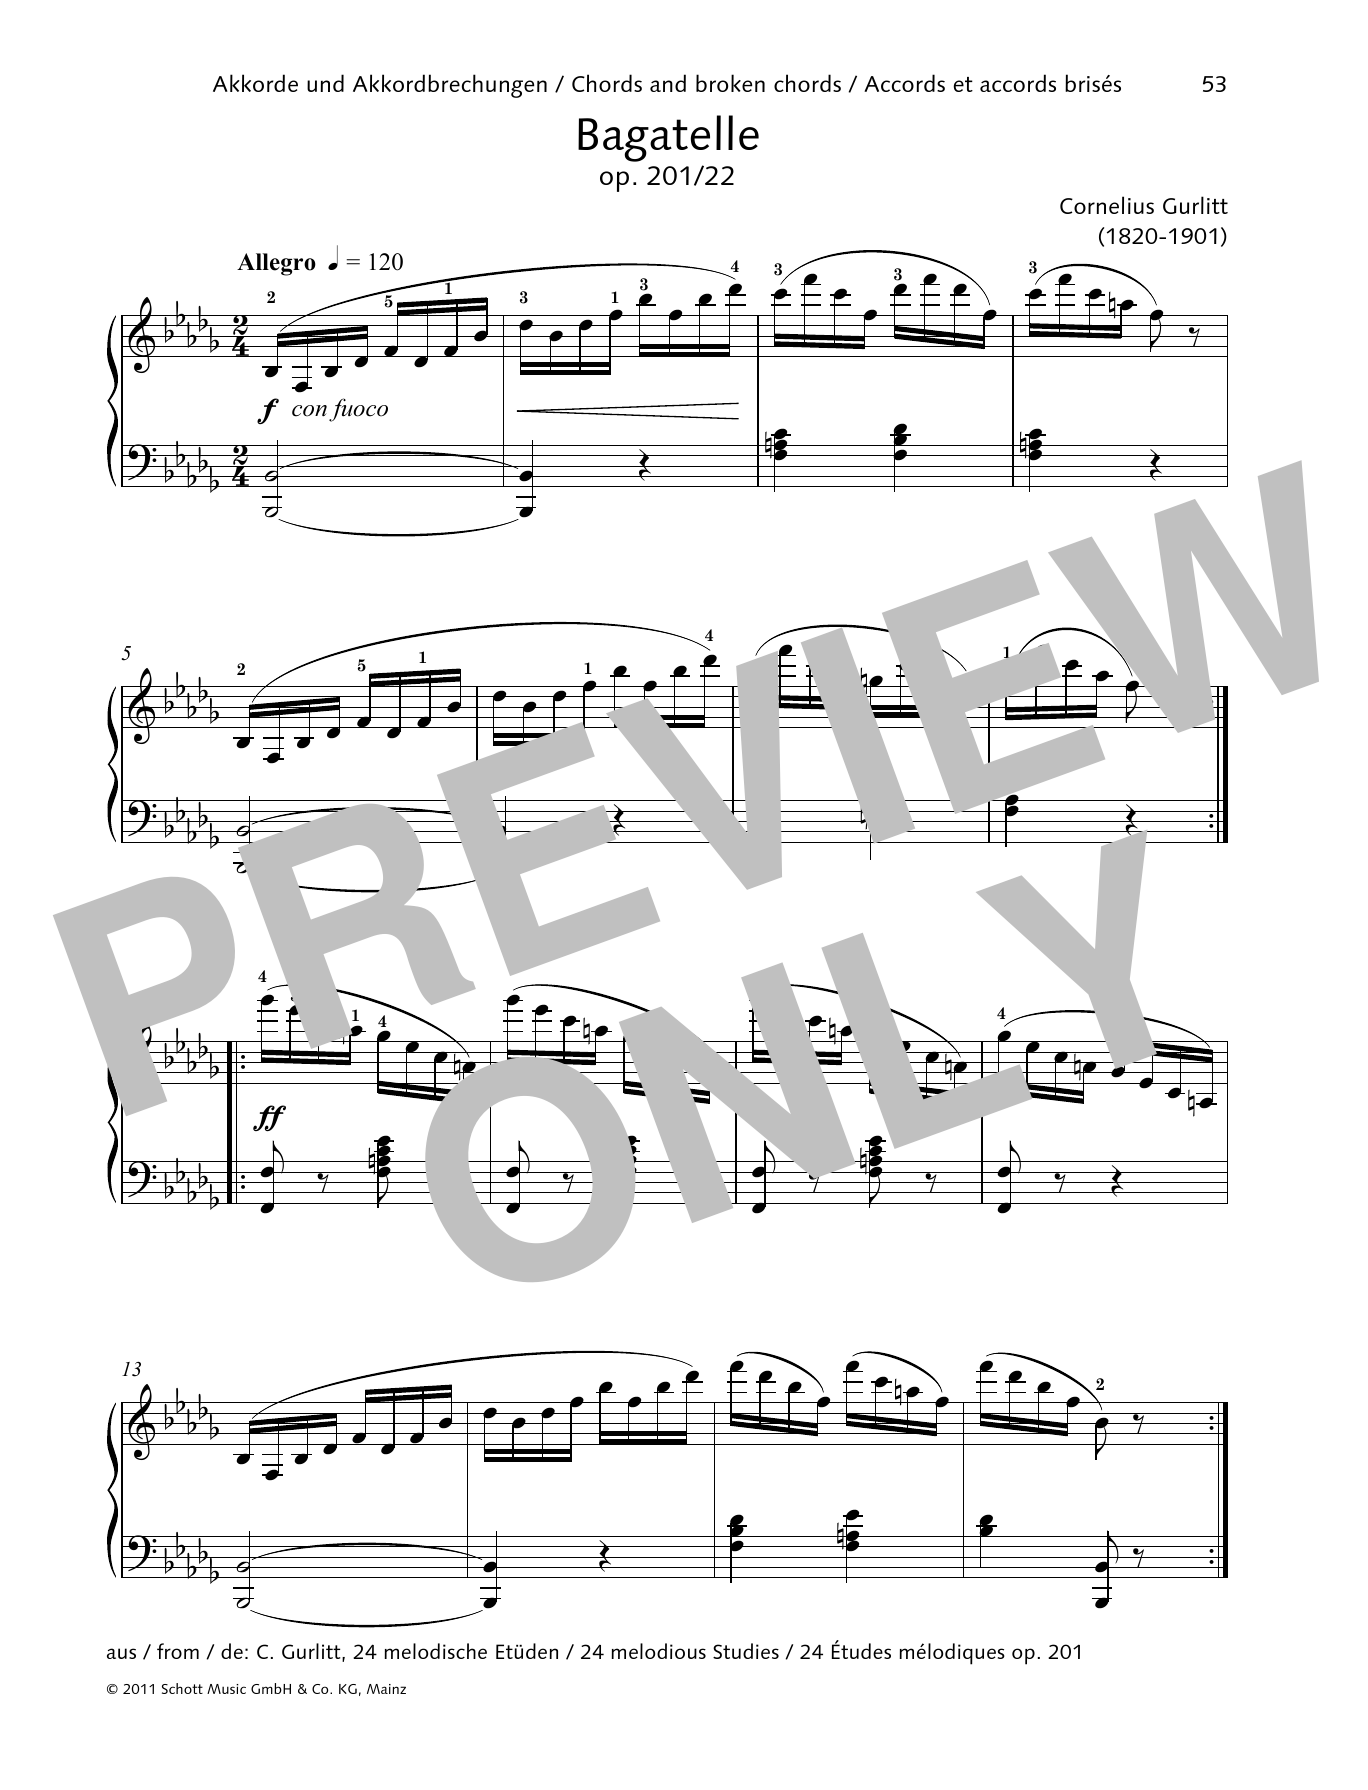 Cornelius Gurlitt Bagatelle Sheet Music Notes & Chords for Piano Solo - Download or Print PDF